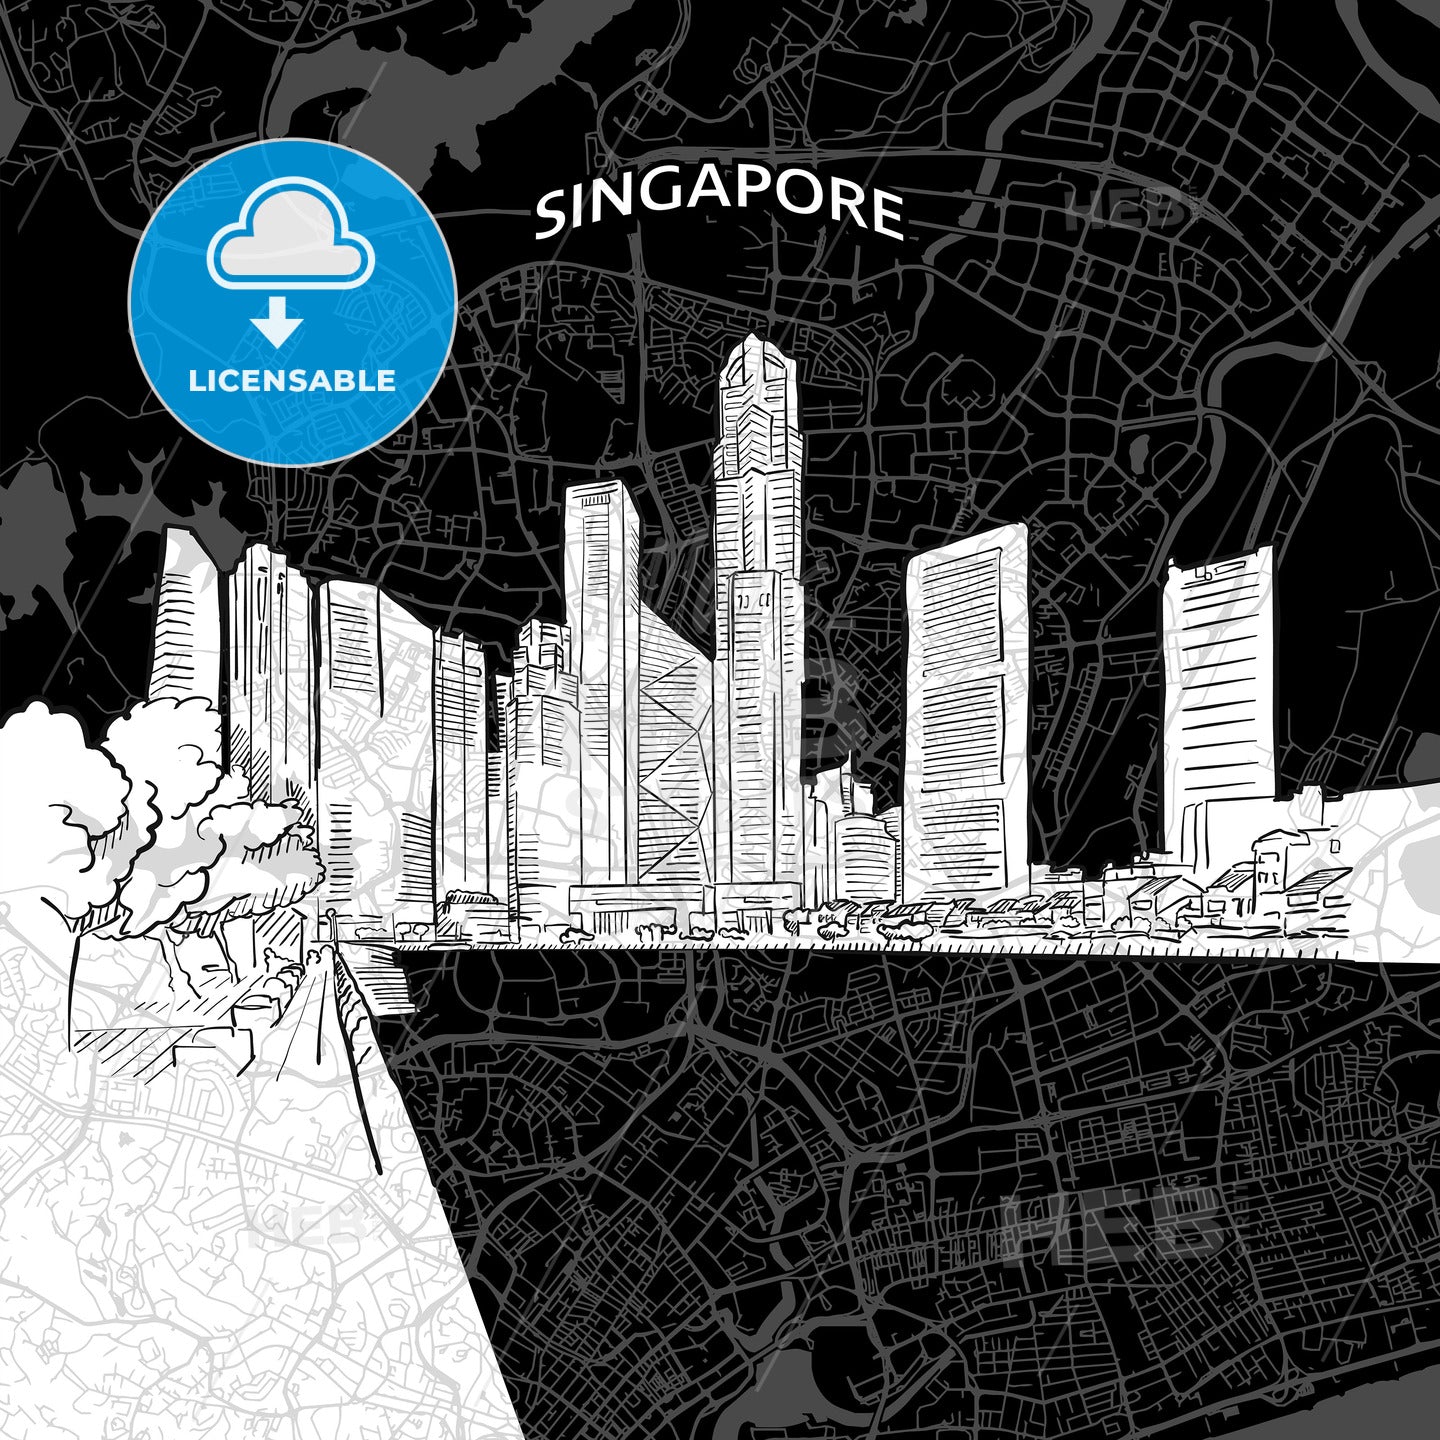 Singapore skyline with map